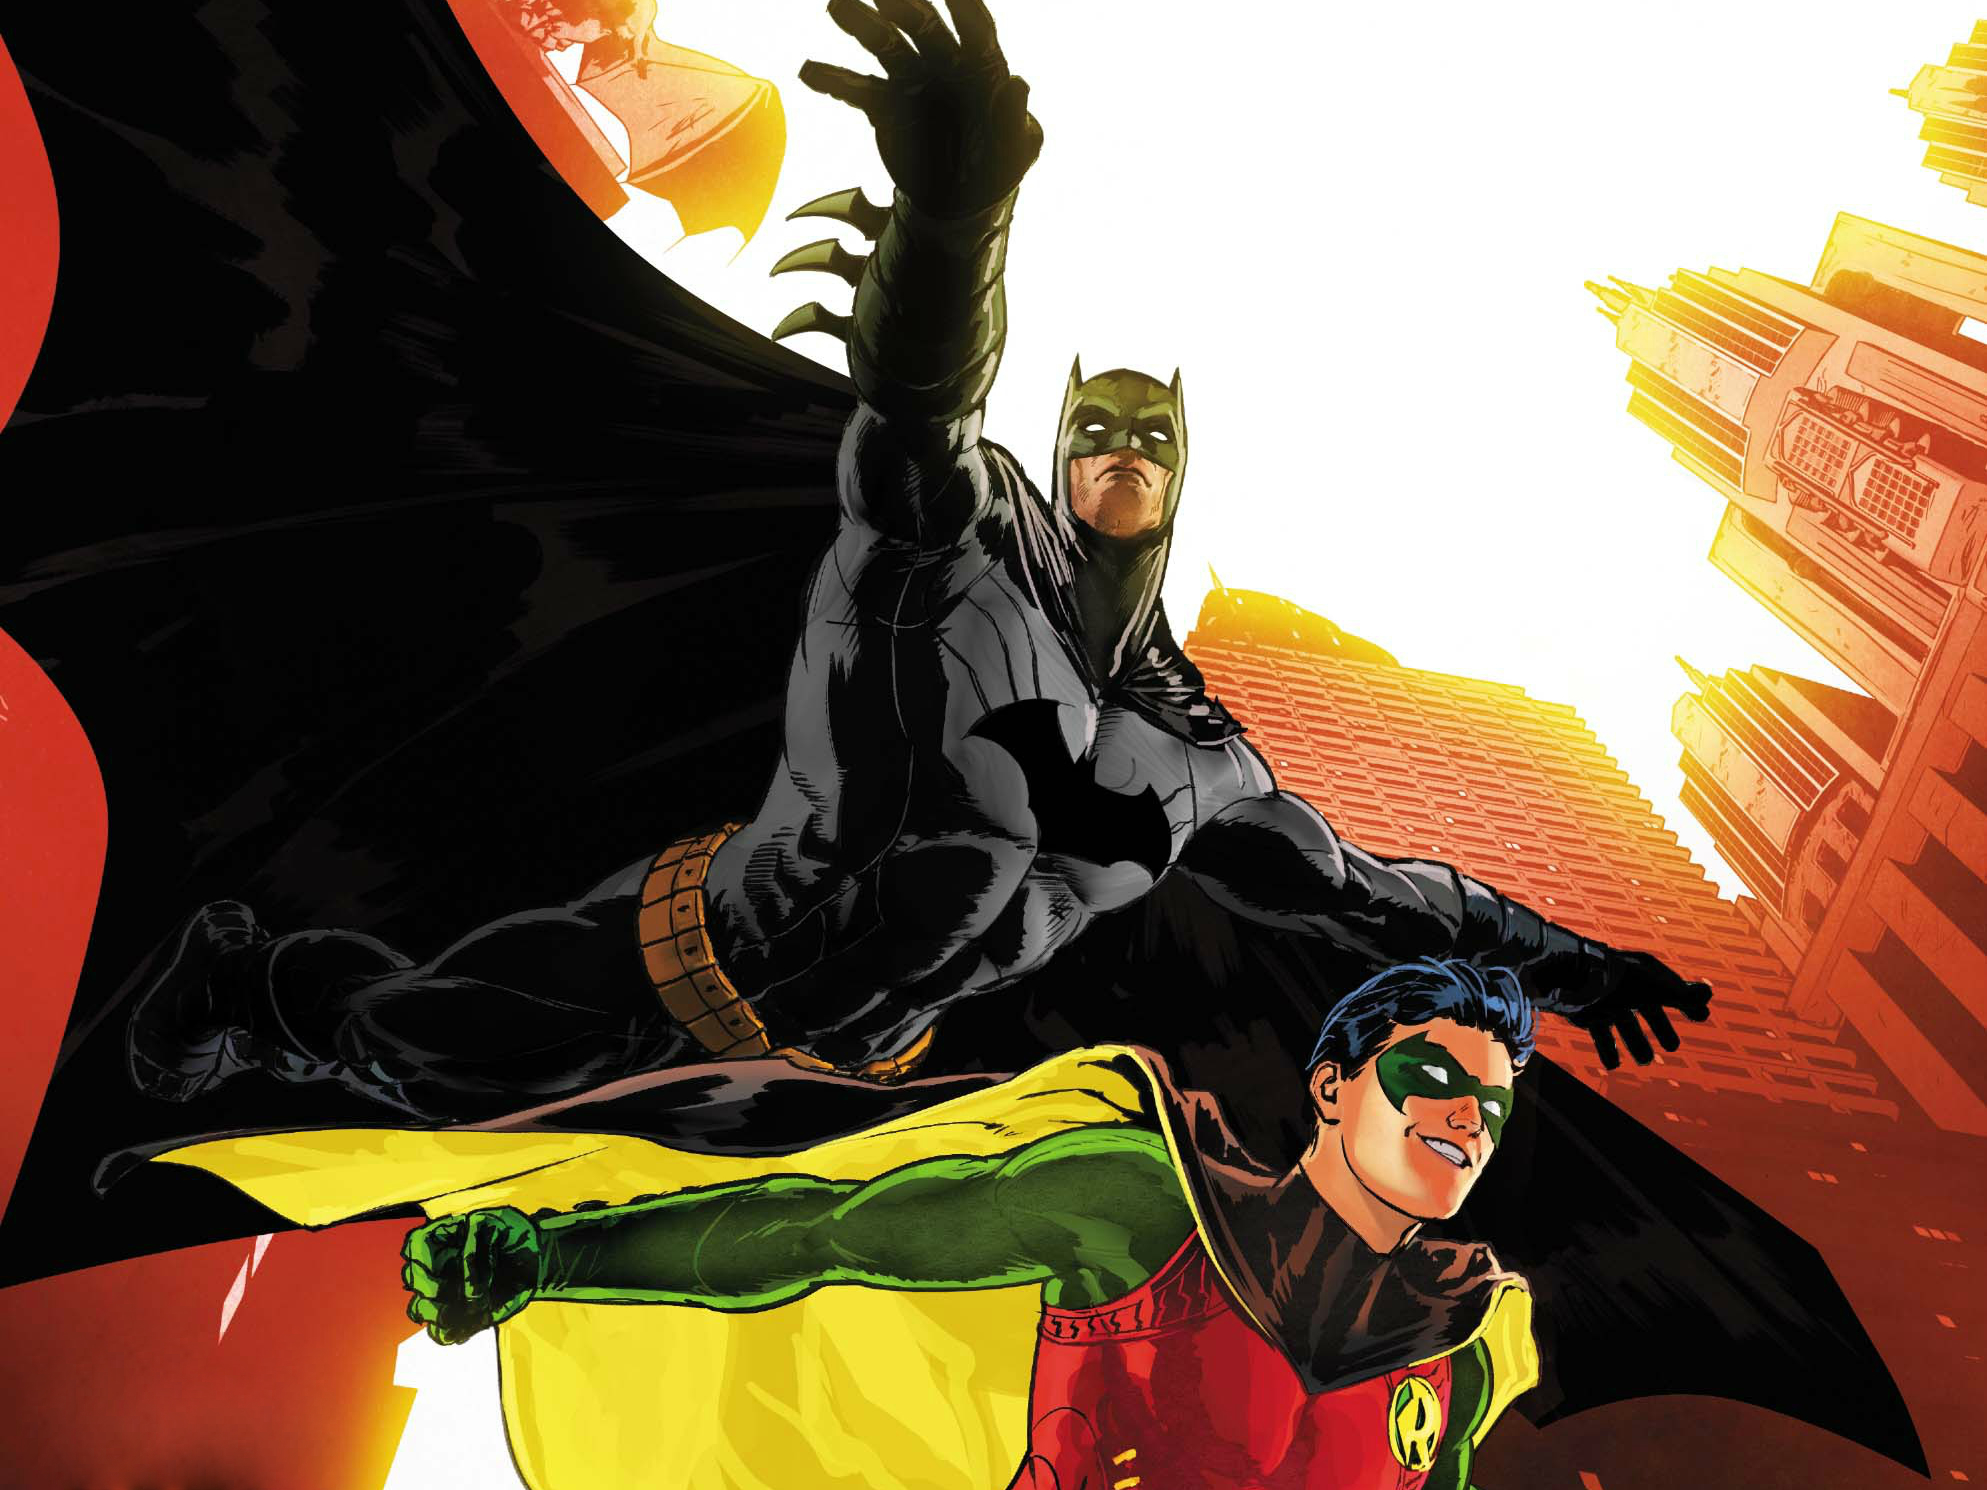 Скачать обои бесплатно Комиксы, Бэтмен, Комиксы Dc, Бэтмен И Робин картинка на рабочий стол ПК